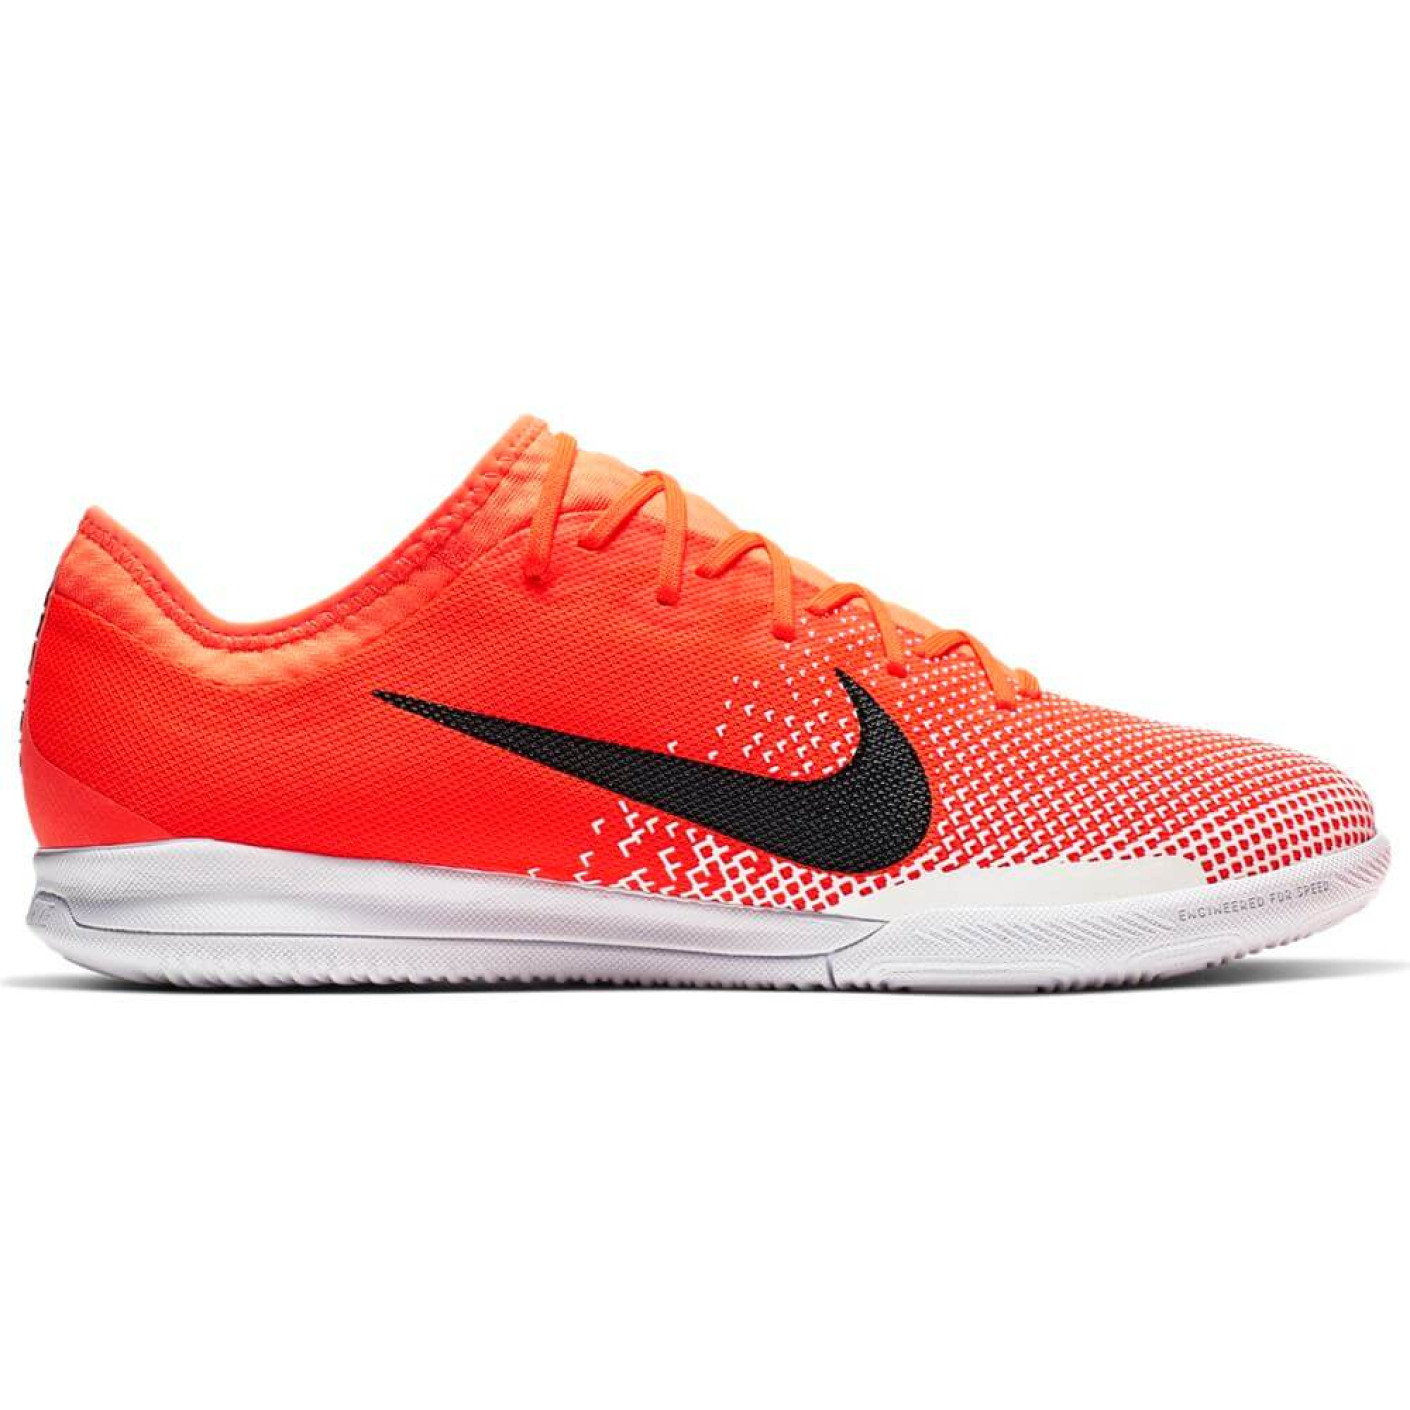 Nike Mercurial Vapor 12 PRO IC Zaalvoetbalschoenen Oranje Zwart